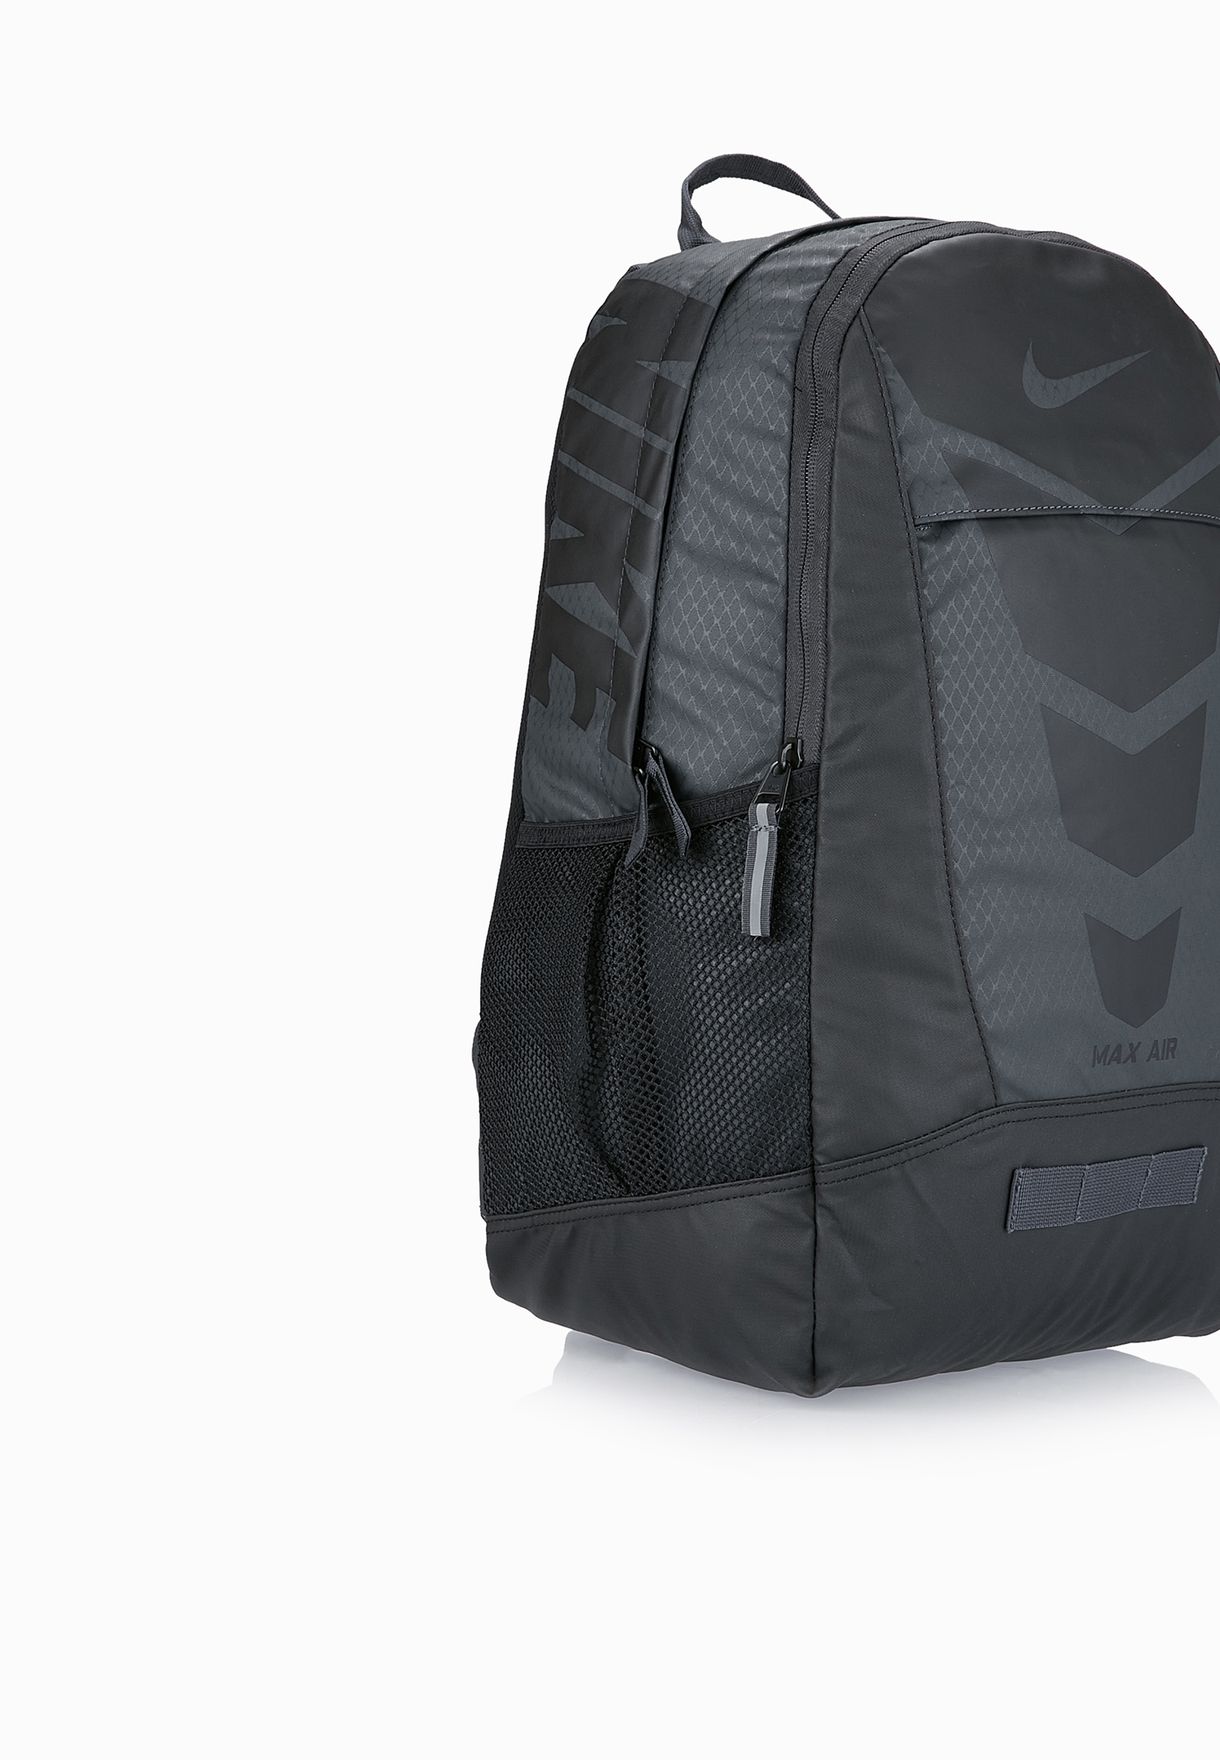 nike max air vapor medium backpack